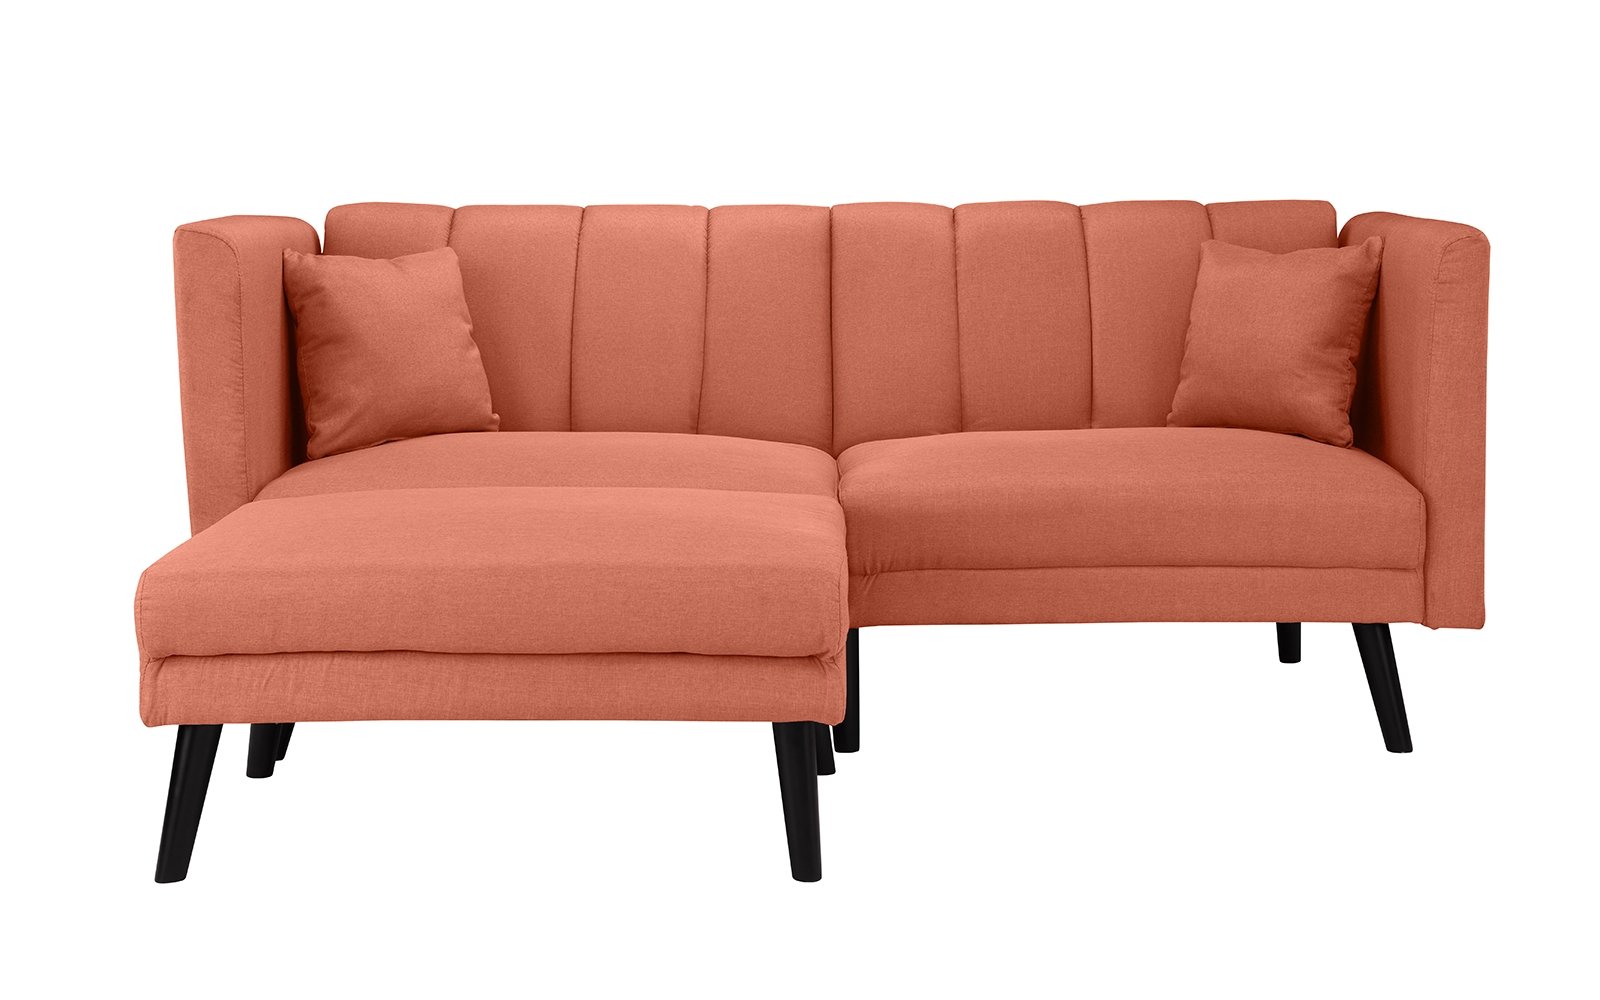 ebay futon sofa bed